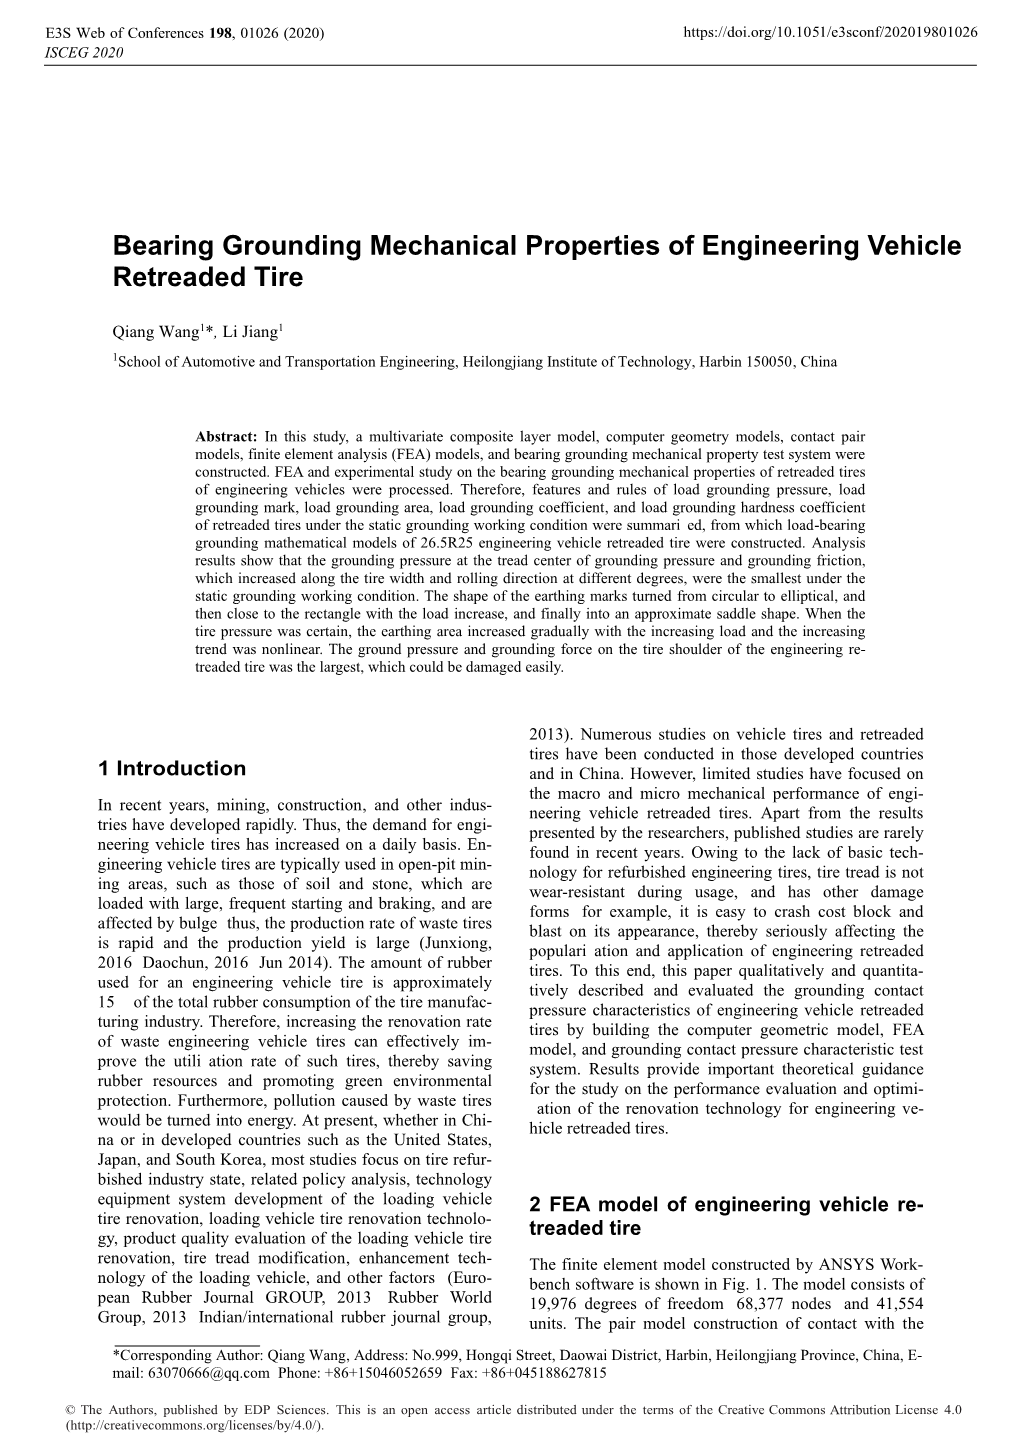 Bearing Grounding Mechanical Properties of Engineering Vehicle Retreaded Tire